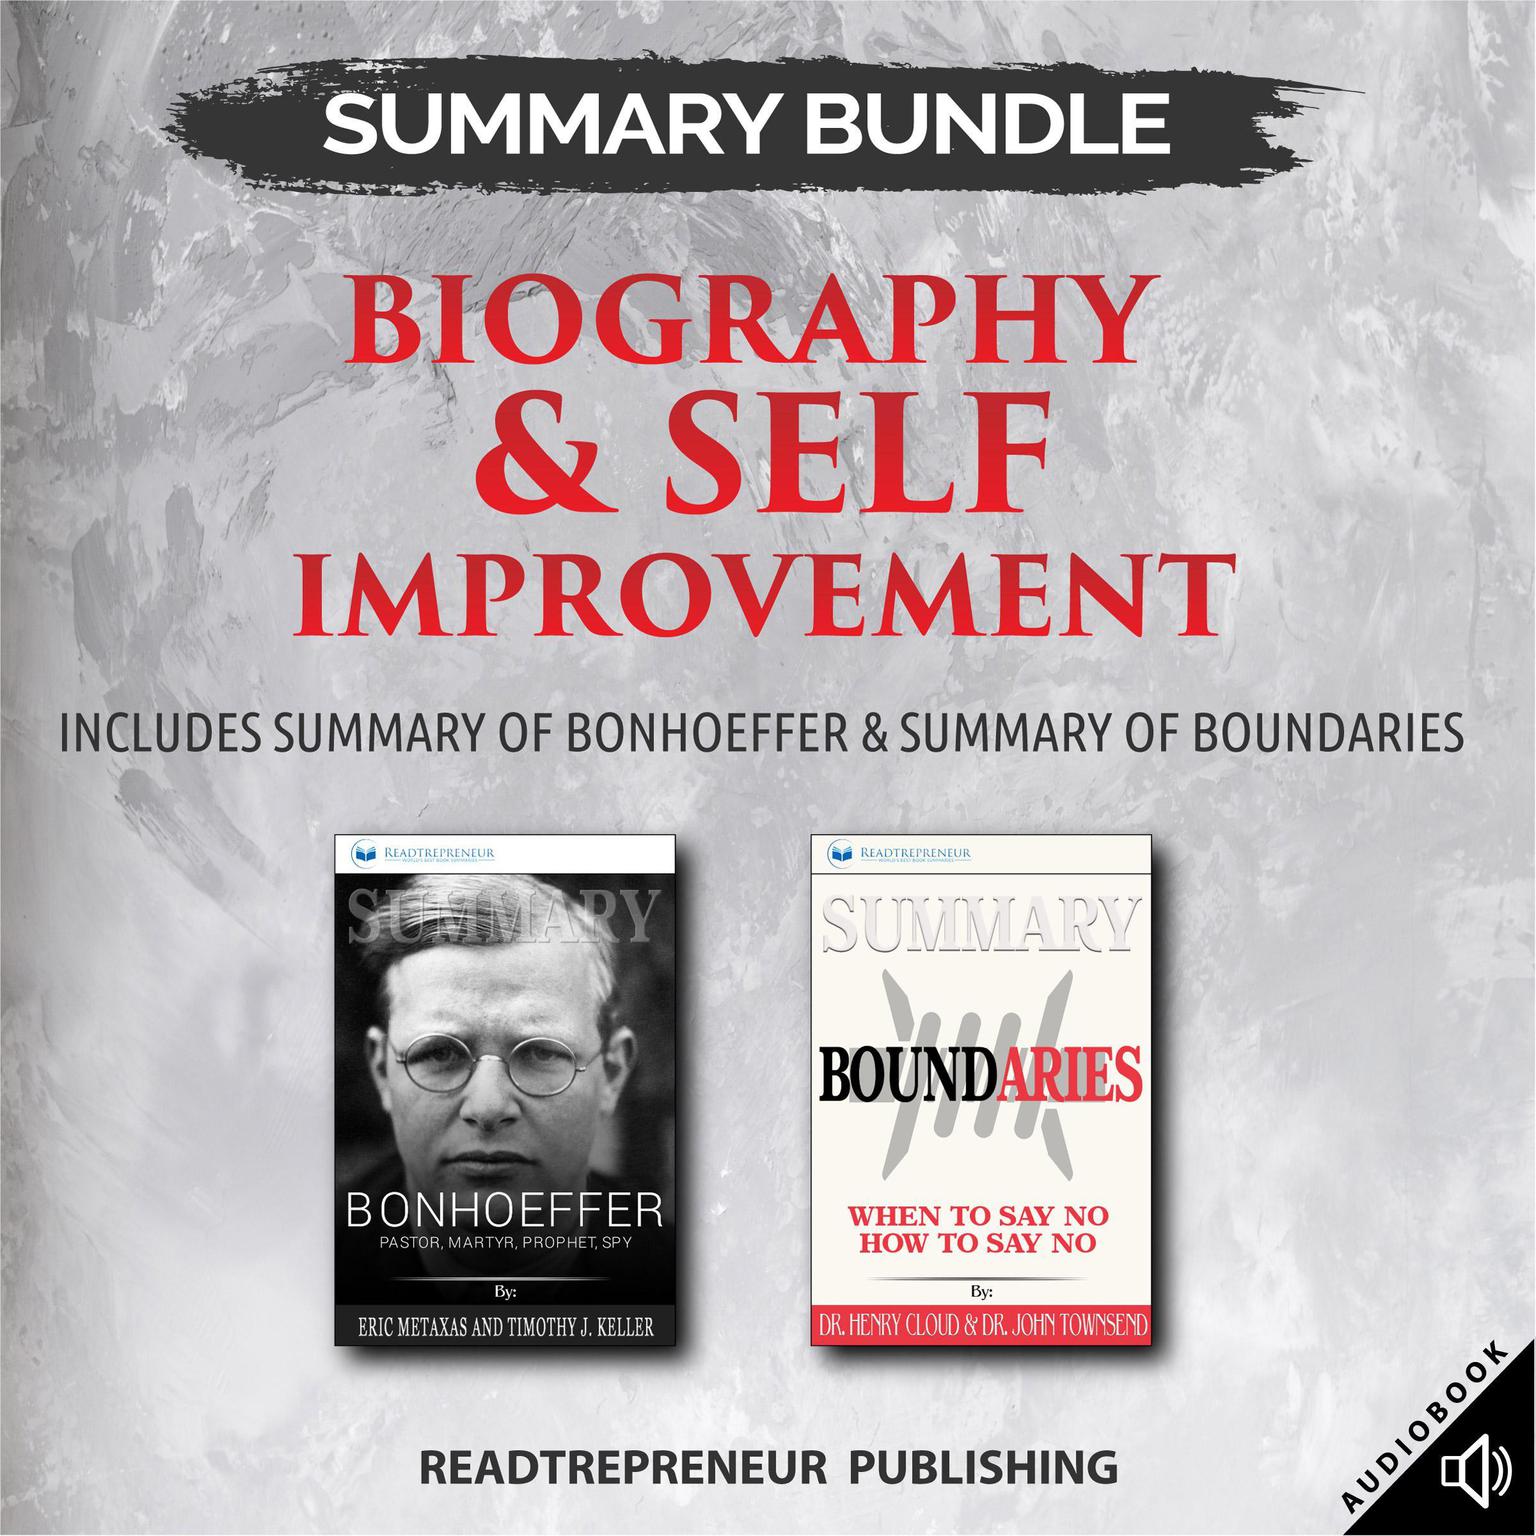 Summary Bundle: Biography & Self Improvement | Readtrepreneur Publishing: Includes Summary of Bonhoeffer & Summary of Boundaries Audiobook, by Readtrepreneur Publishing